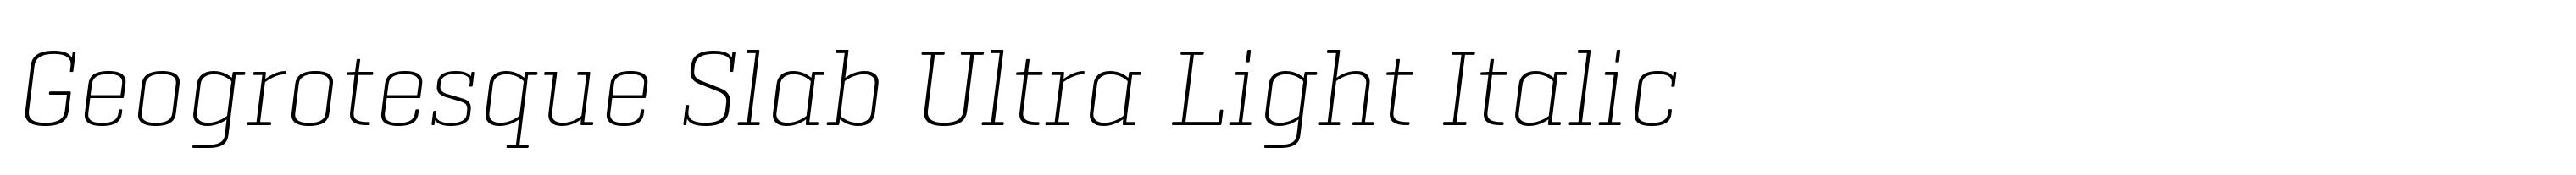 Geogrotesque Slab Ultra Light Italic